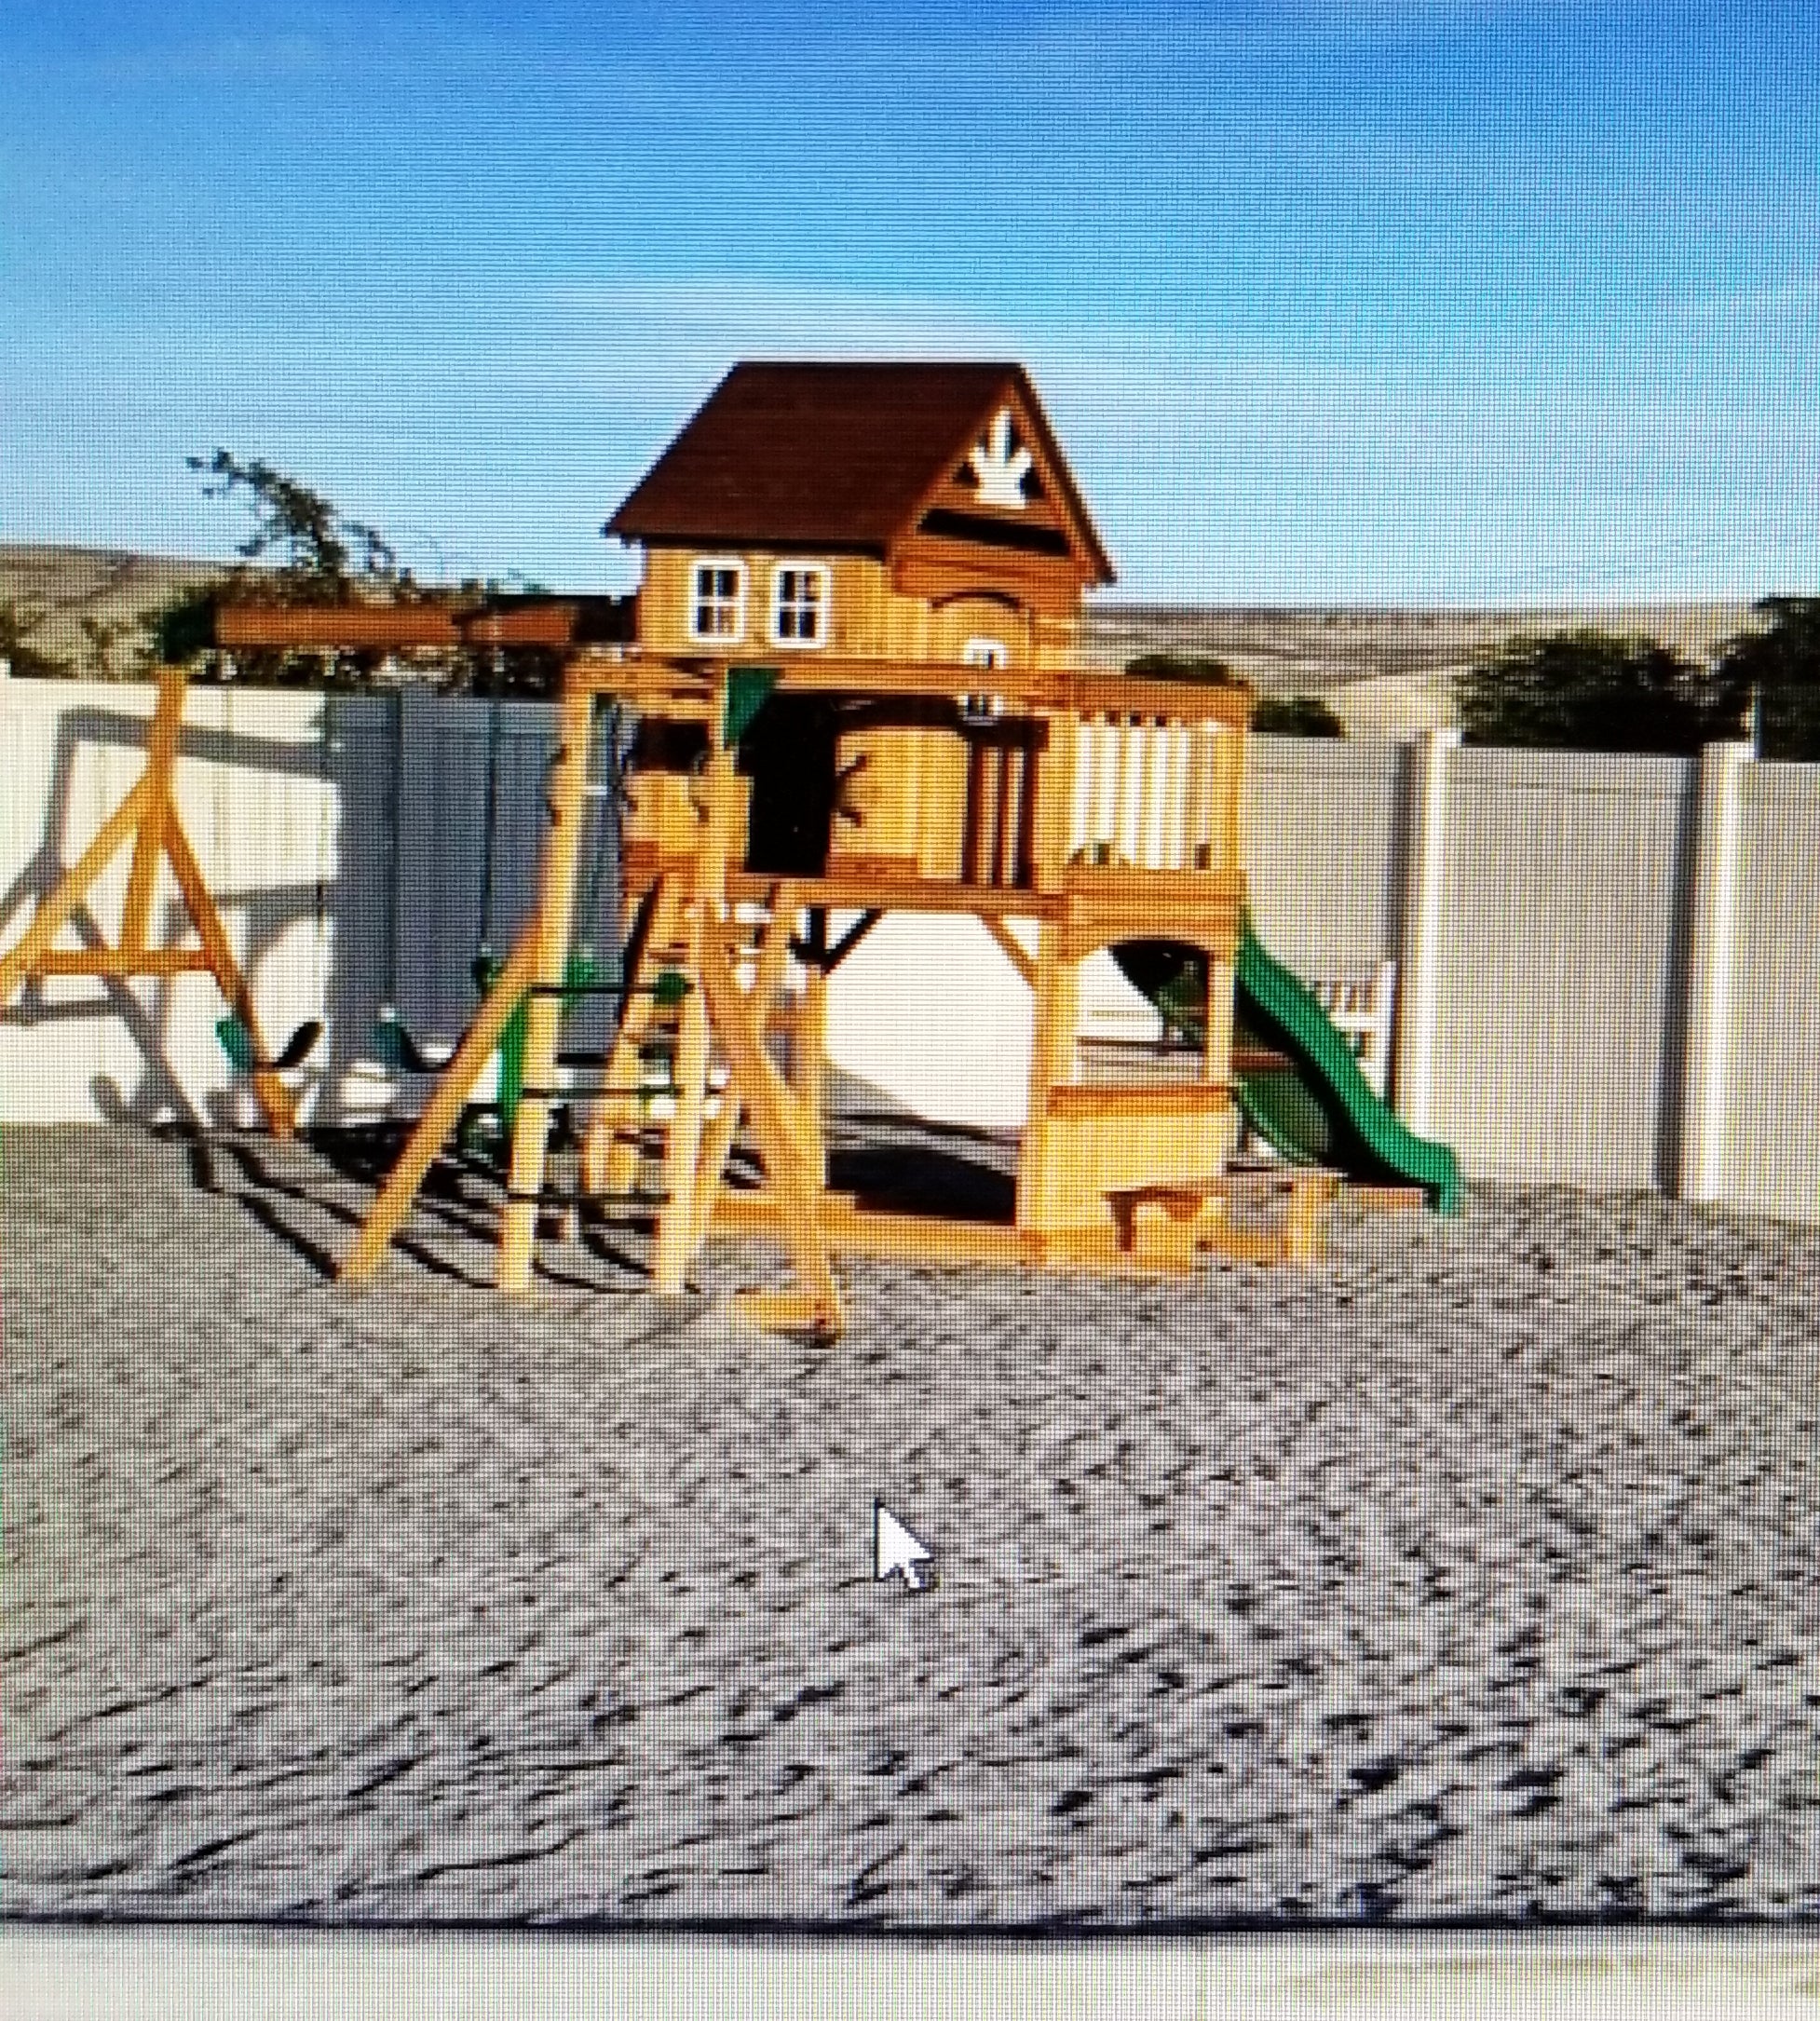 Nice playground for kids